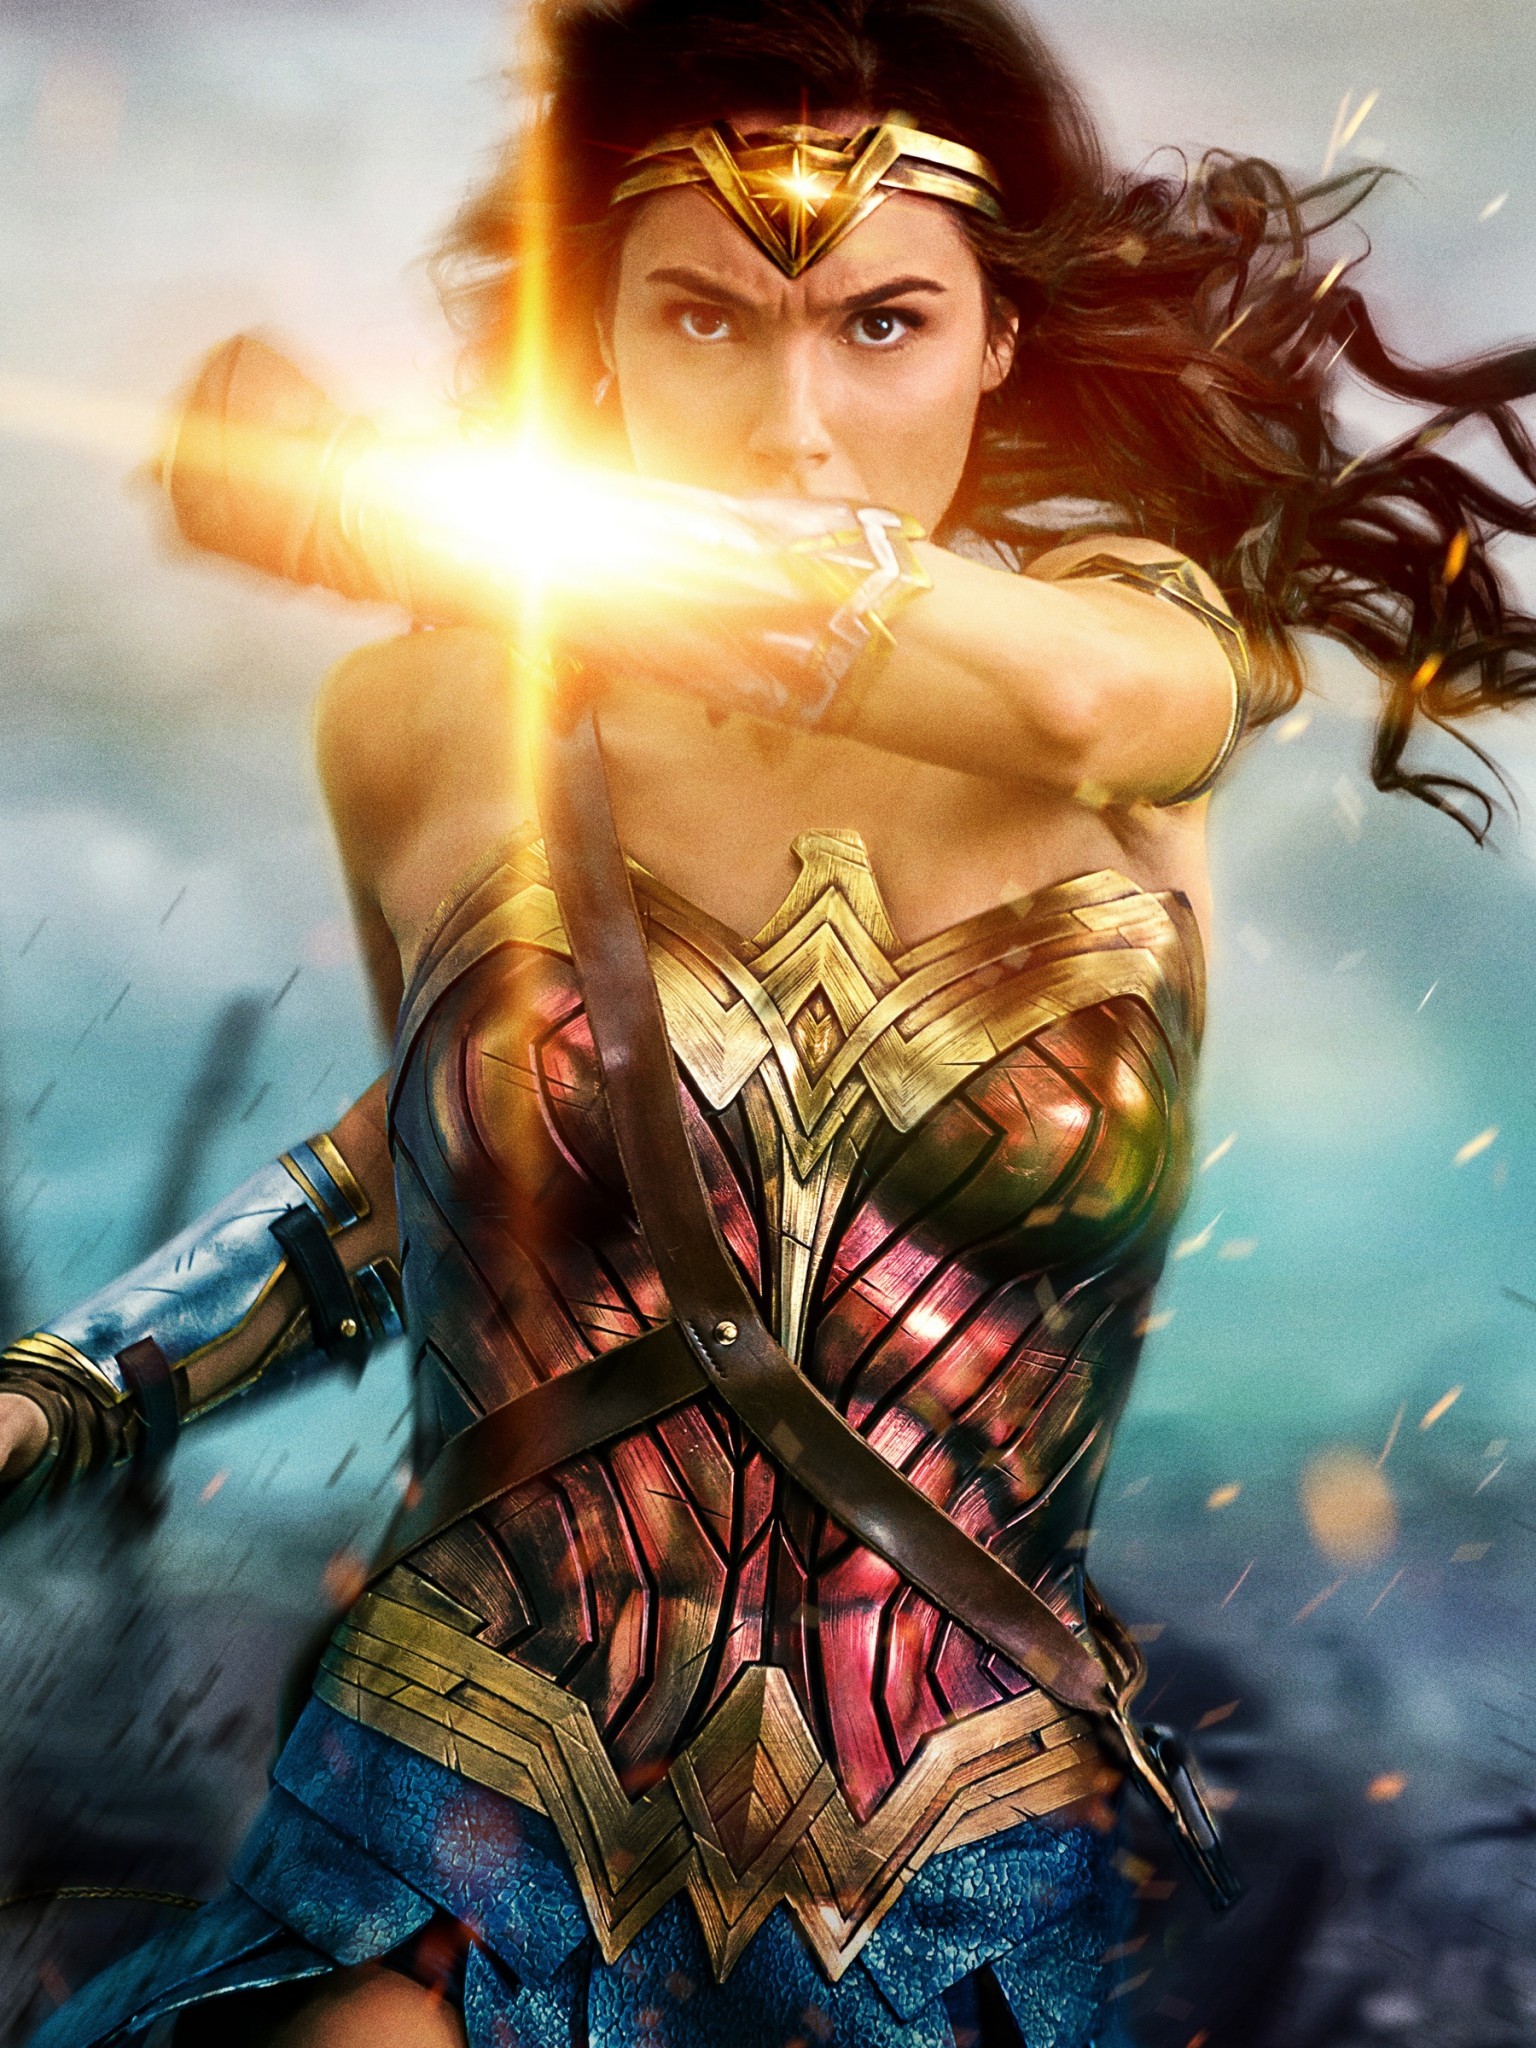 wonder woman wallpaper,cg artwork,fictional character,wonder woman,superhero,justice league